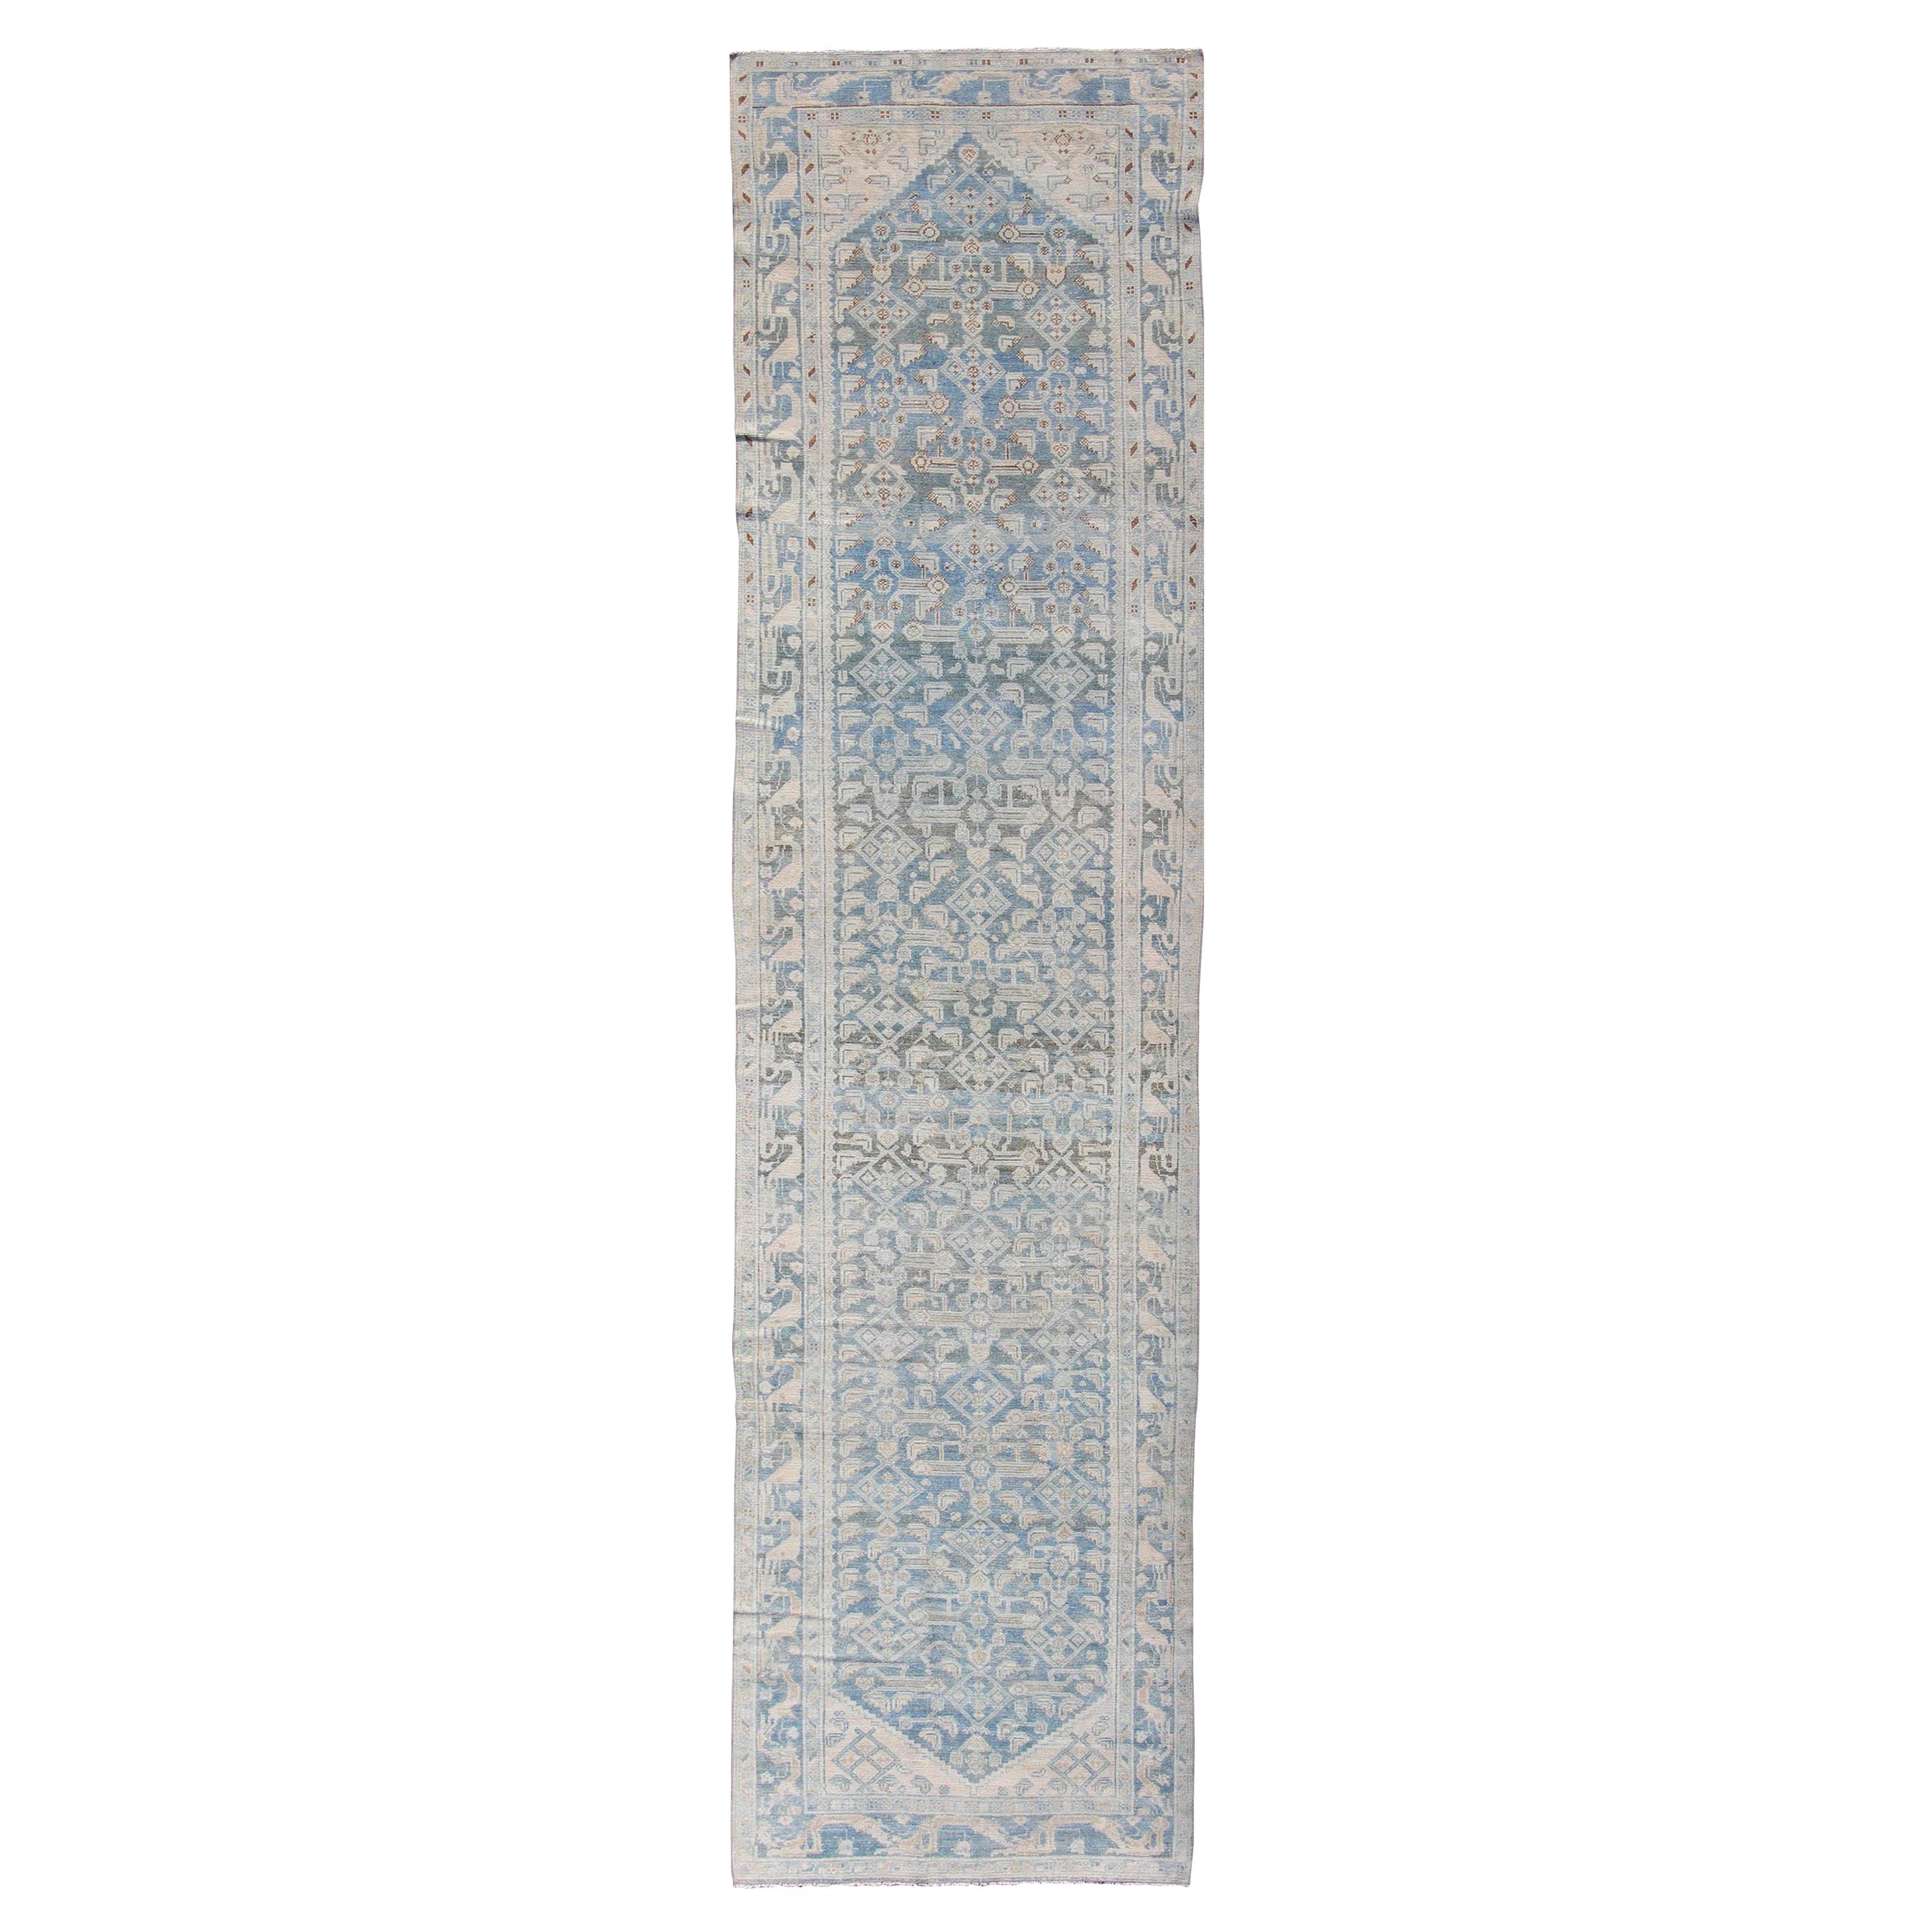 Long tapis de couloir persan ancien Malayer avec motif Herati sur toute sa surface en bleu doux